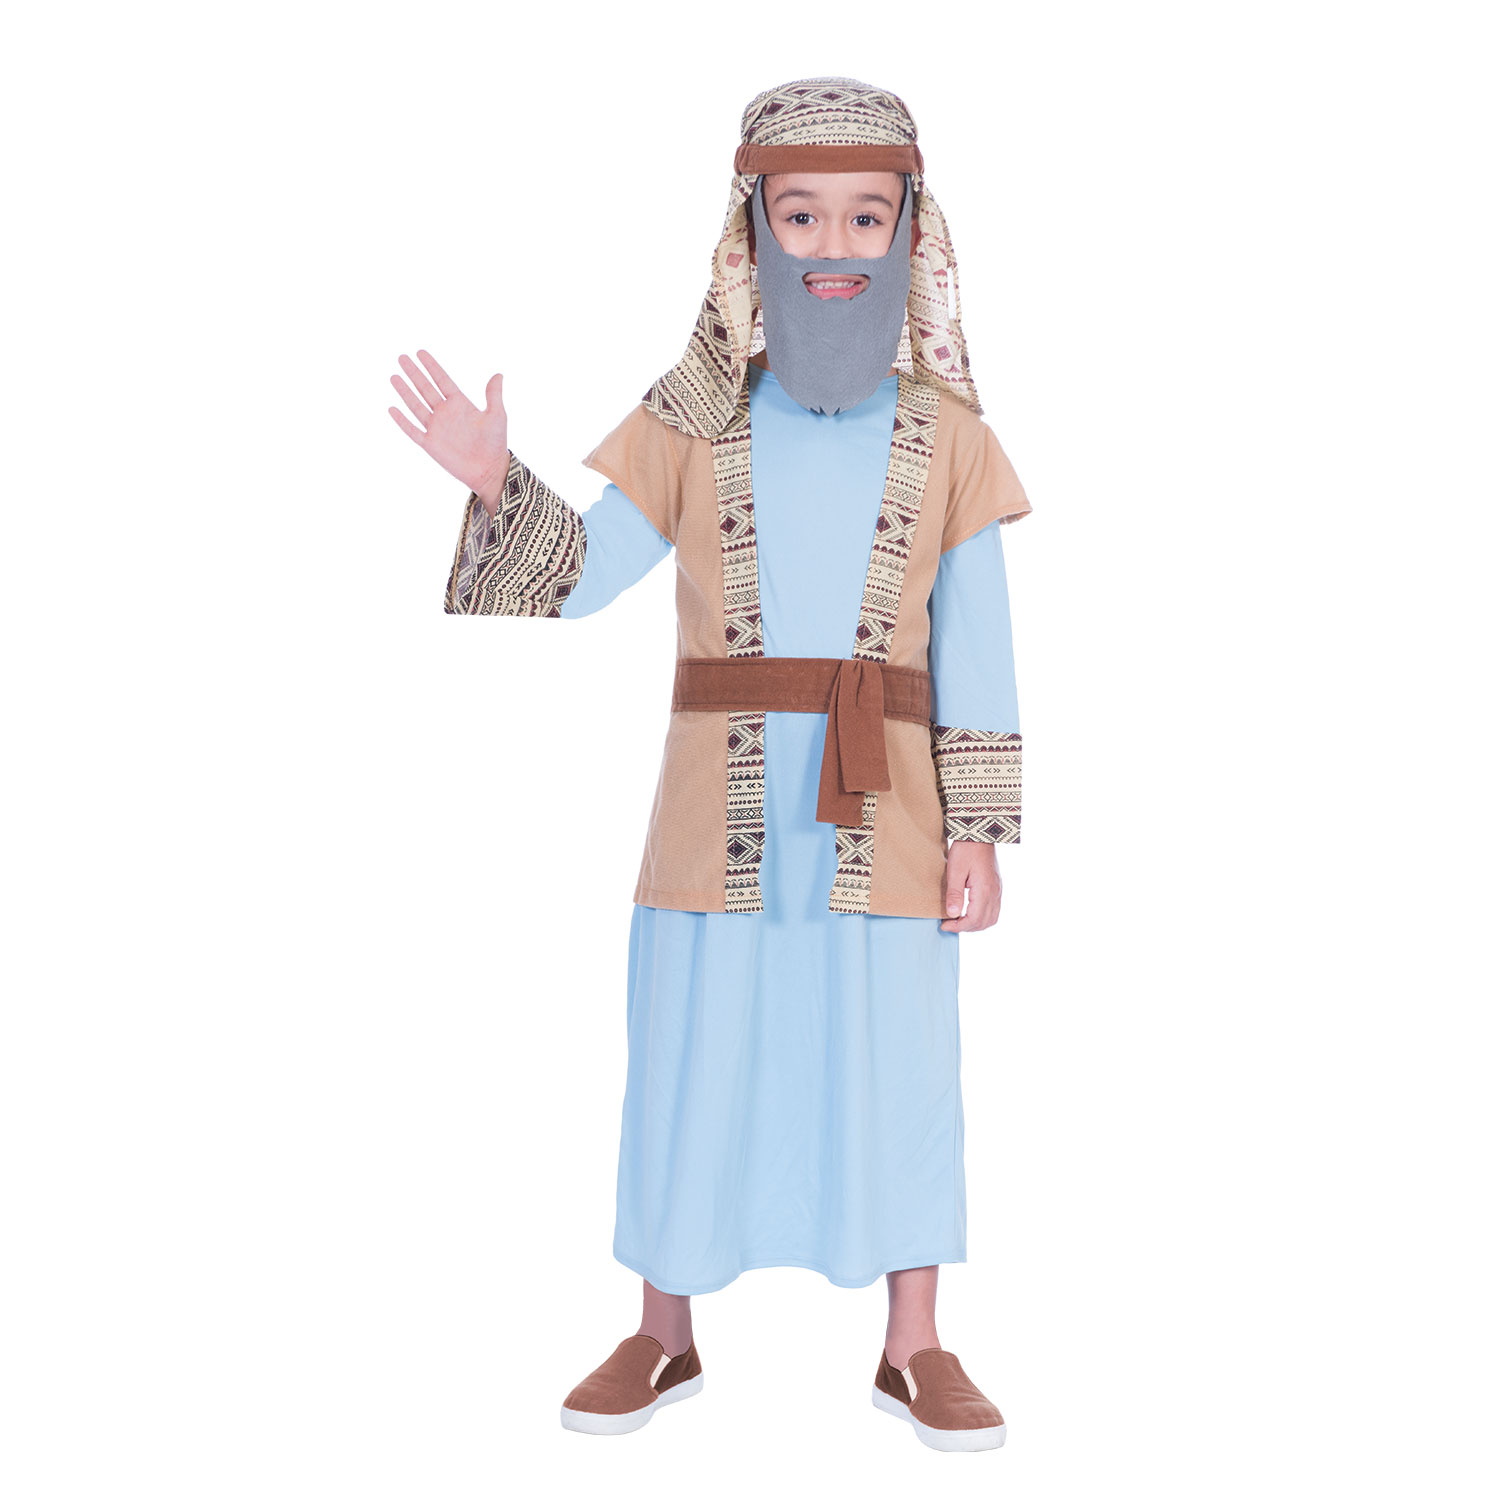 Shepherd Costume With Beard - Kids